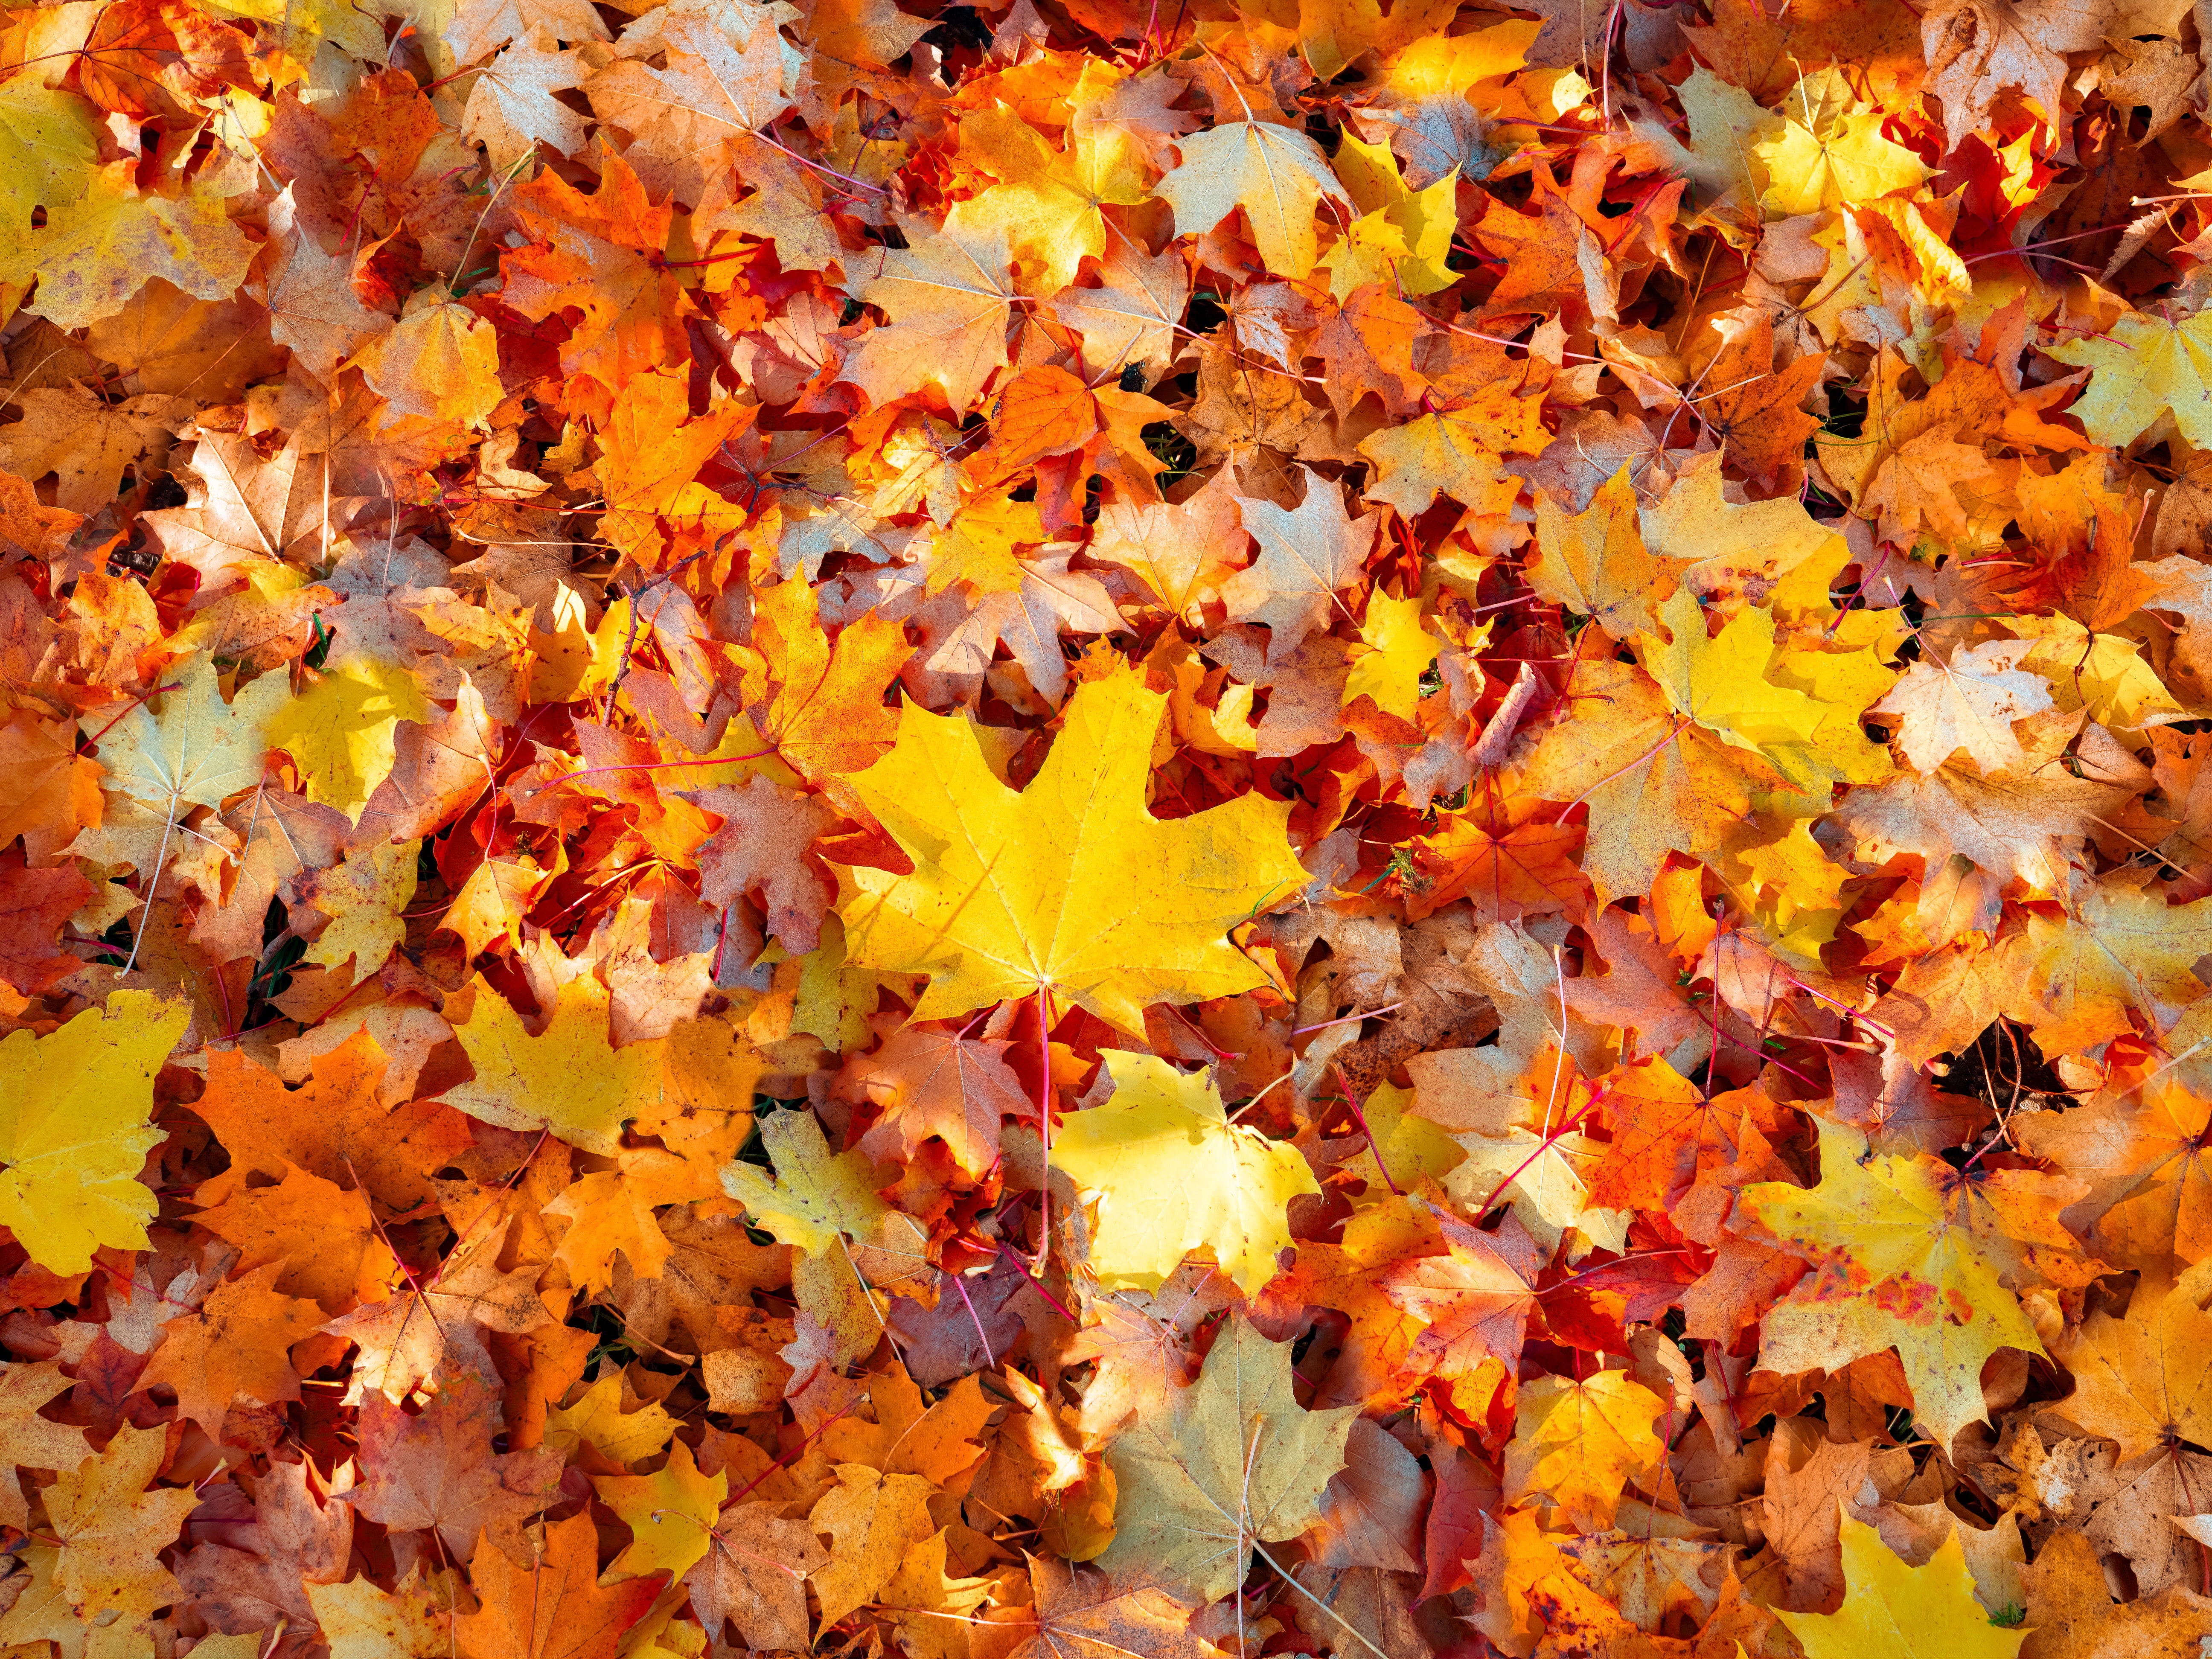 HD wallpaper, Maple Leaves, Texture, Foliage, Leaf Background, Fallen Leaves, 5K, Seasons, Colorful, Autumn Leaves